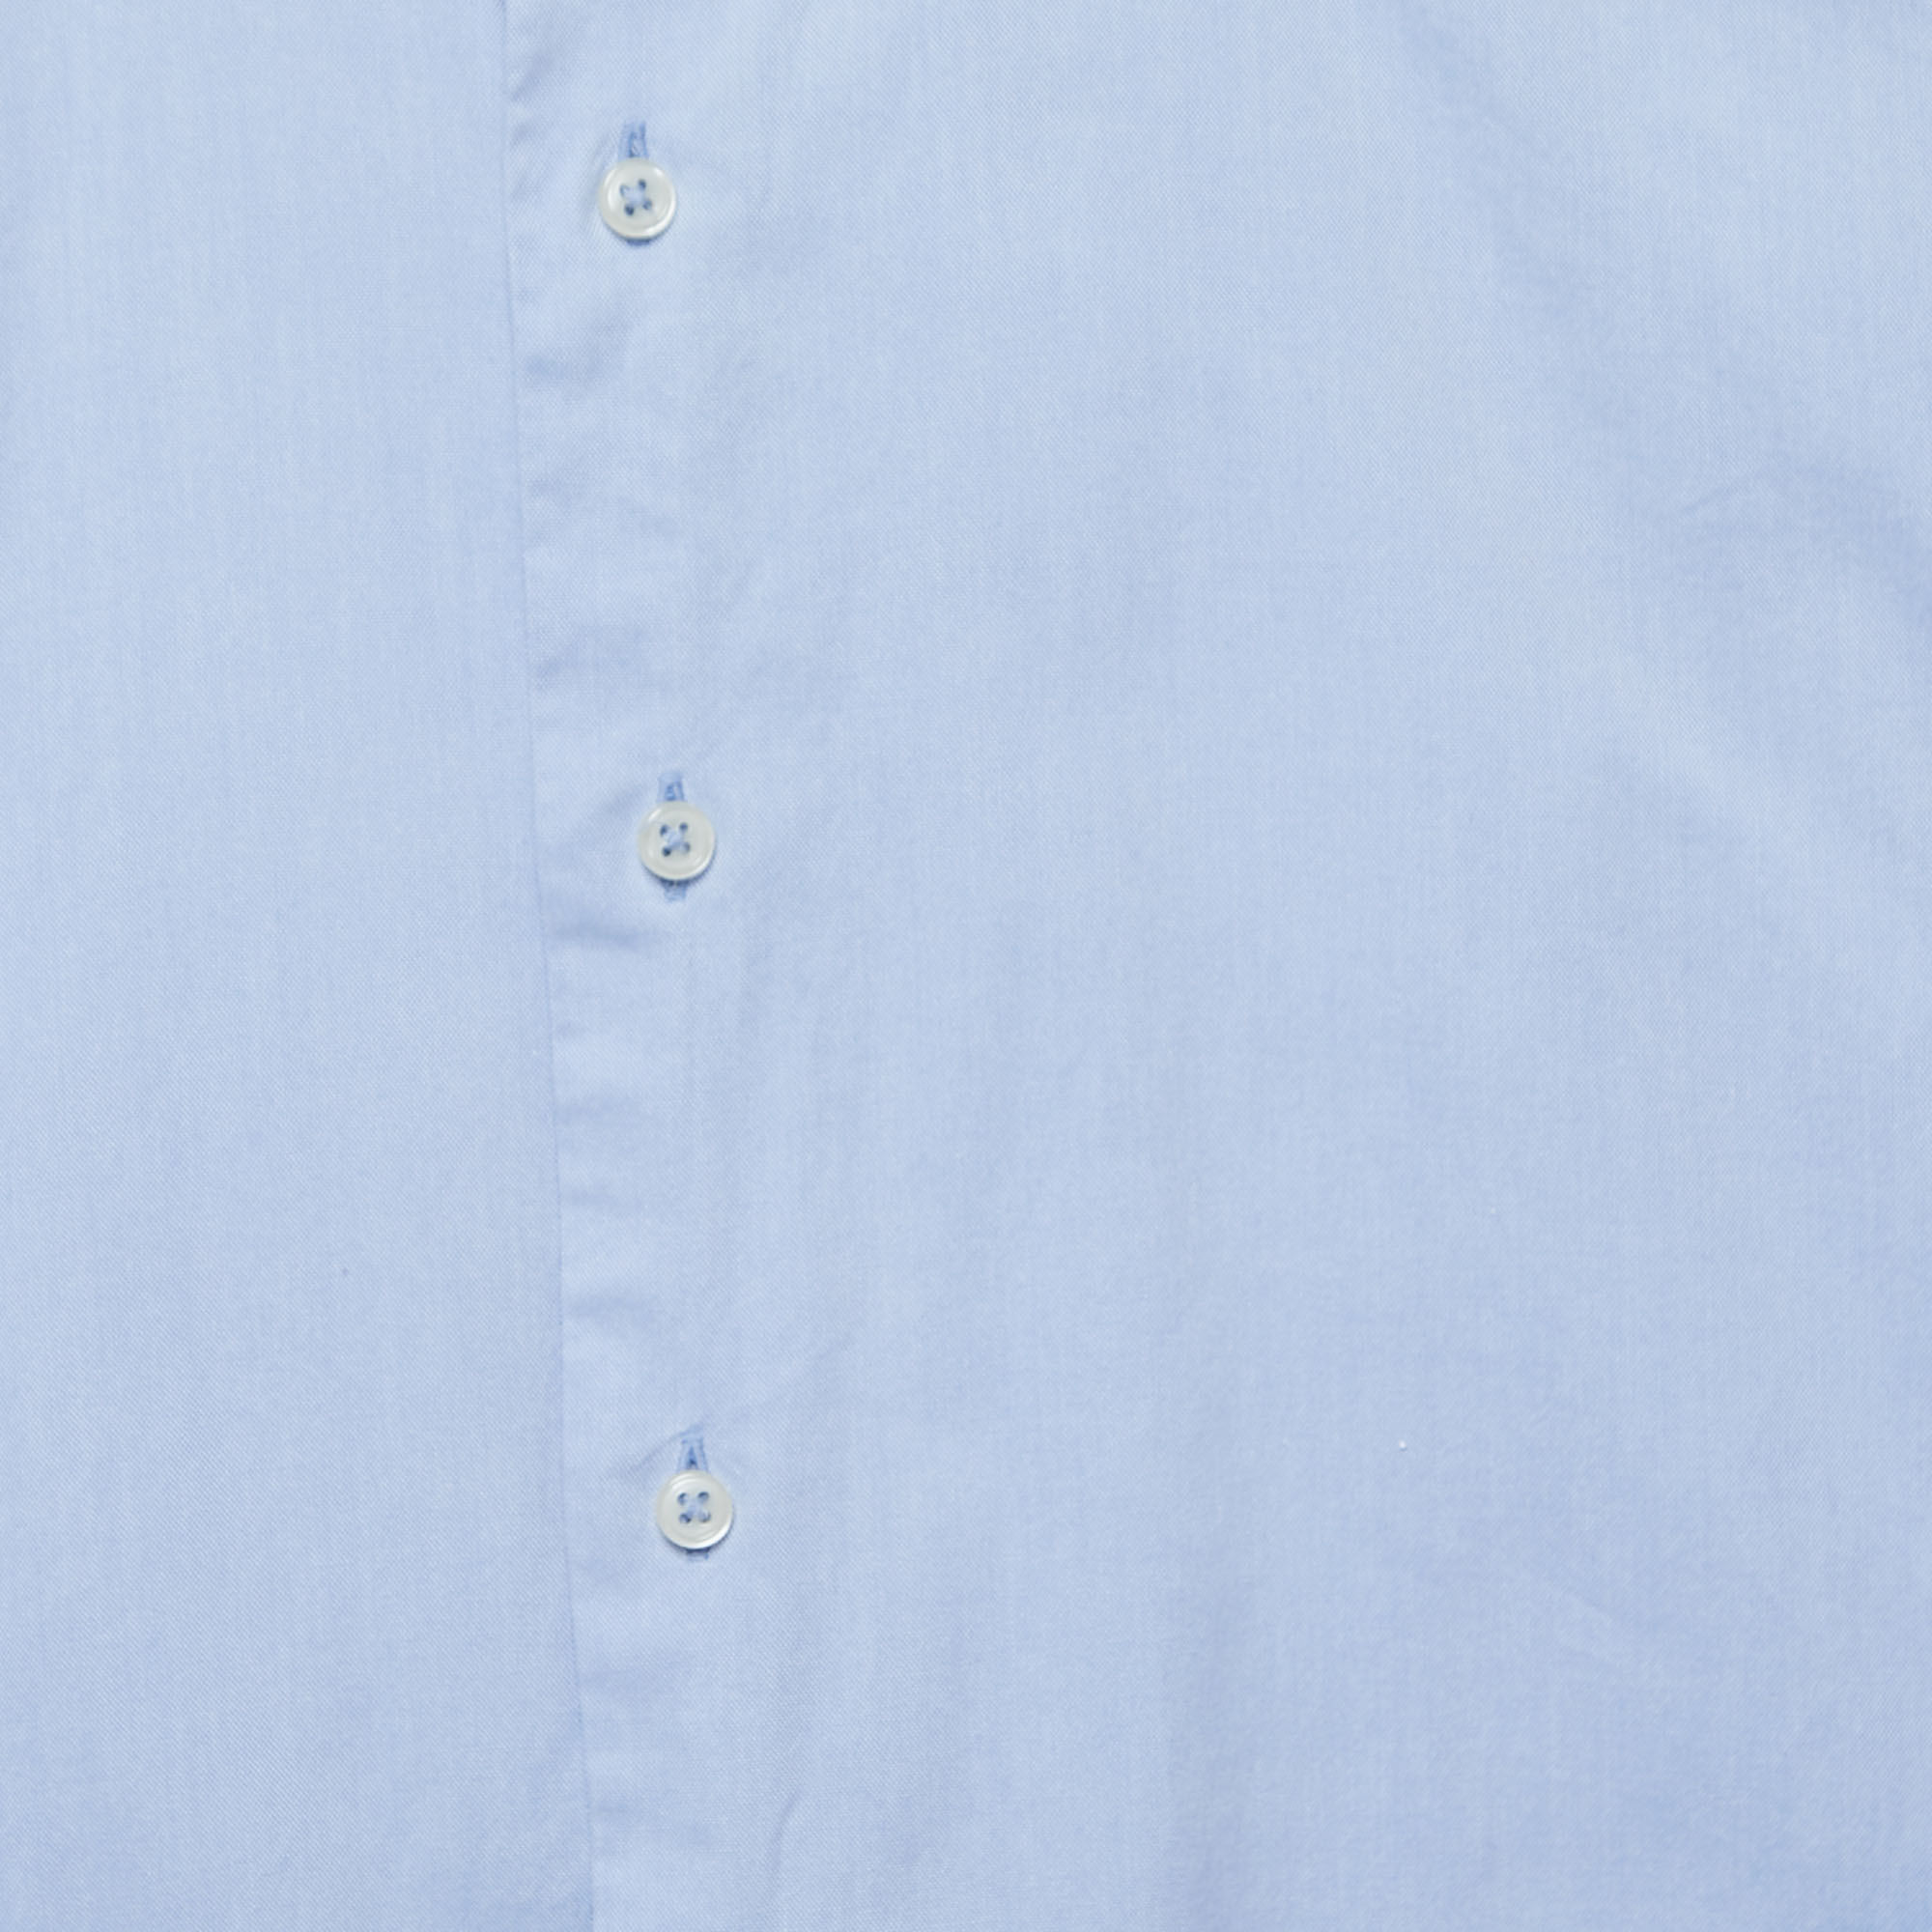 Balmain Light Blue Cotton Full Sleeve Shirt S